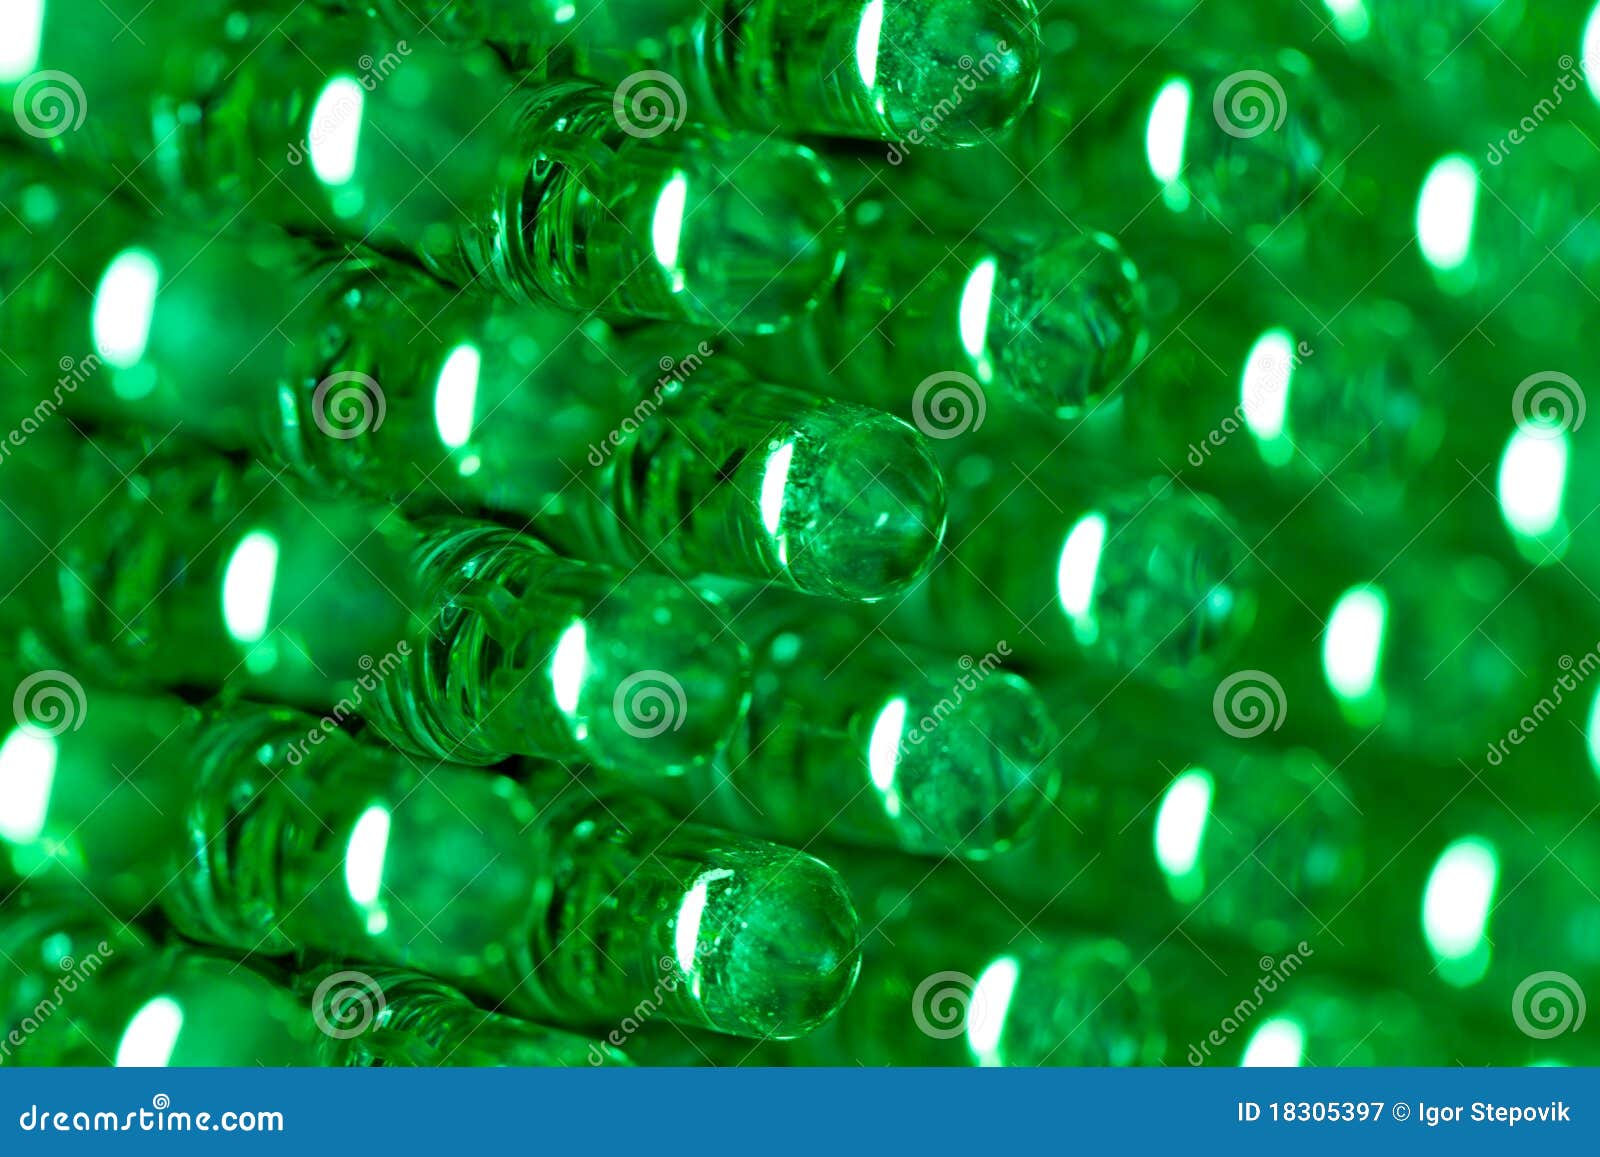 green led diode display panel